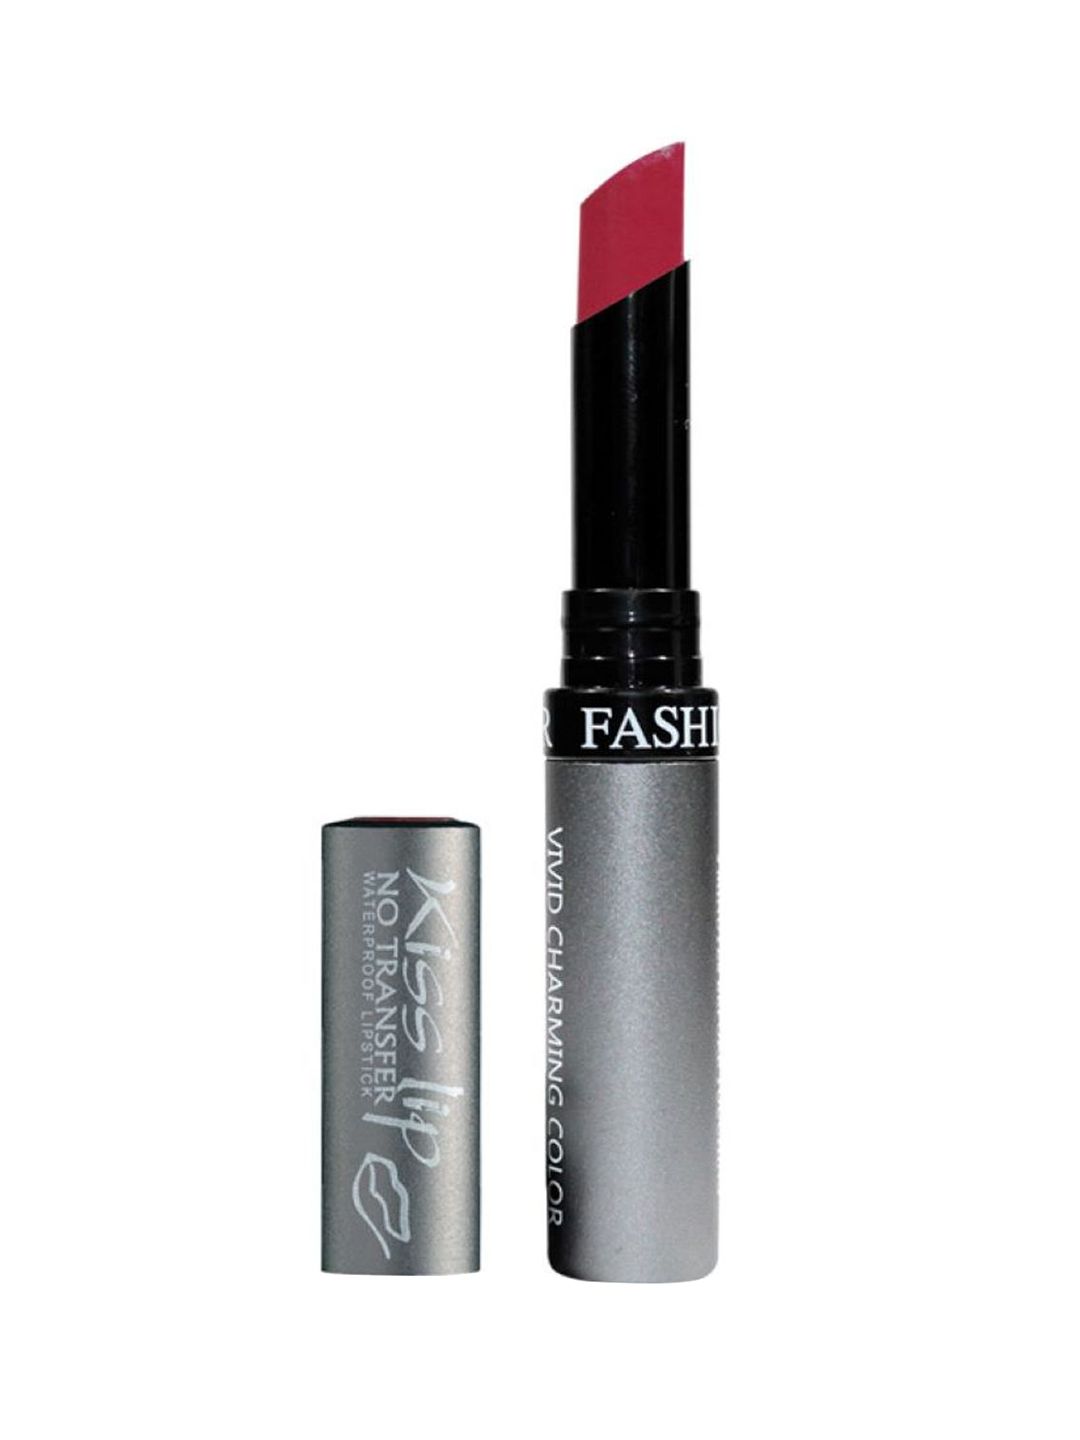 Fashion Colour Kiss Lip Vivid Charming Color No Transfer Lipstick - Ruby Red 100 Price in India